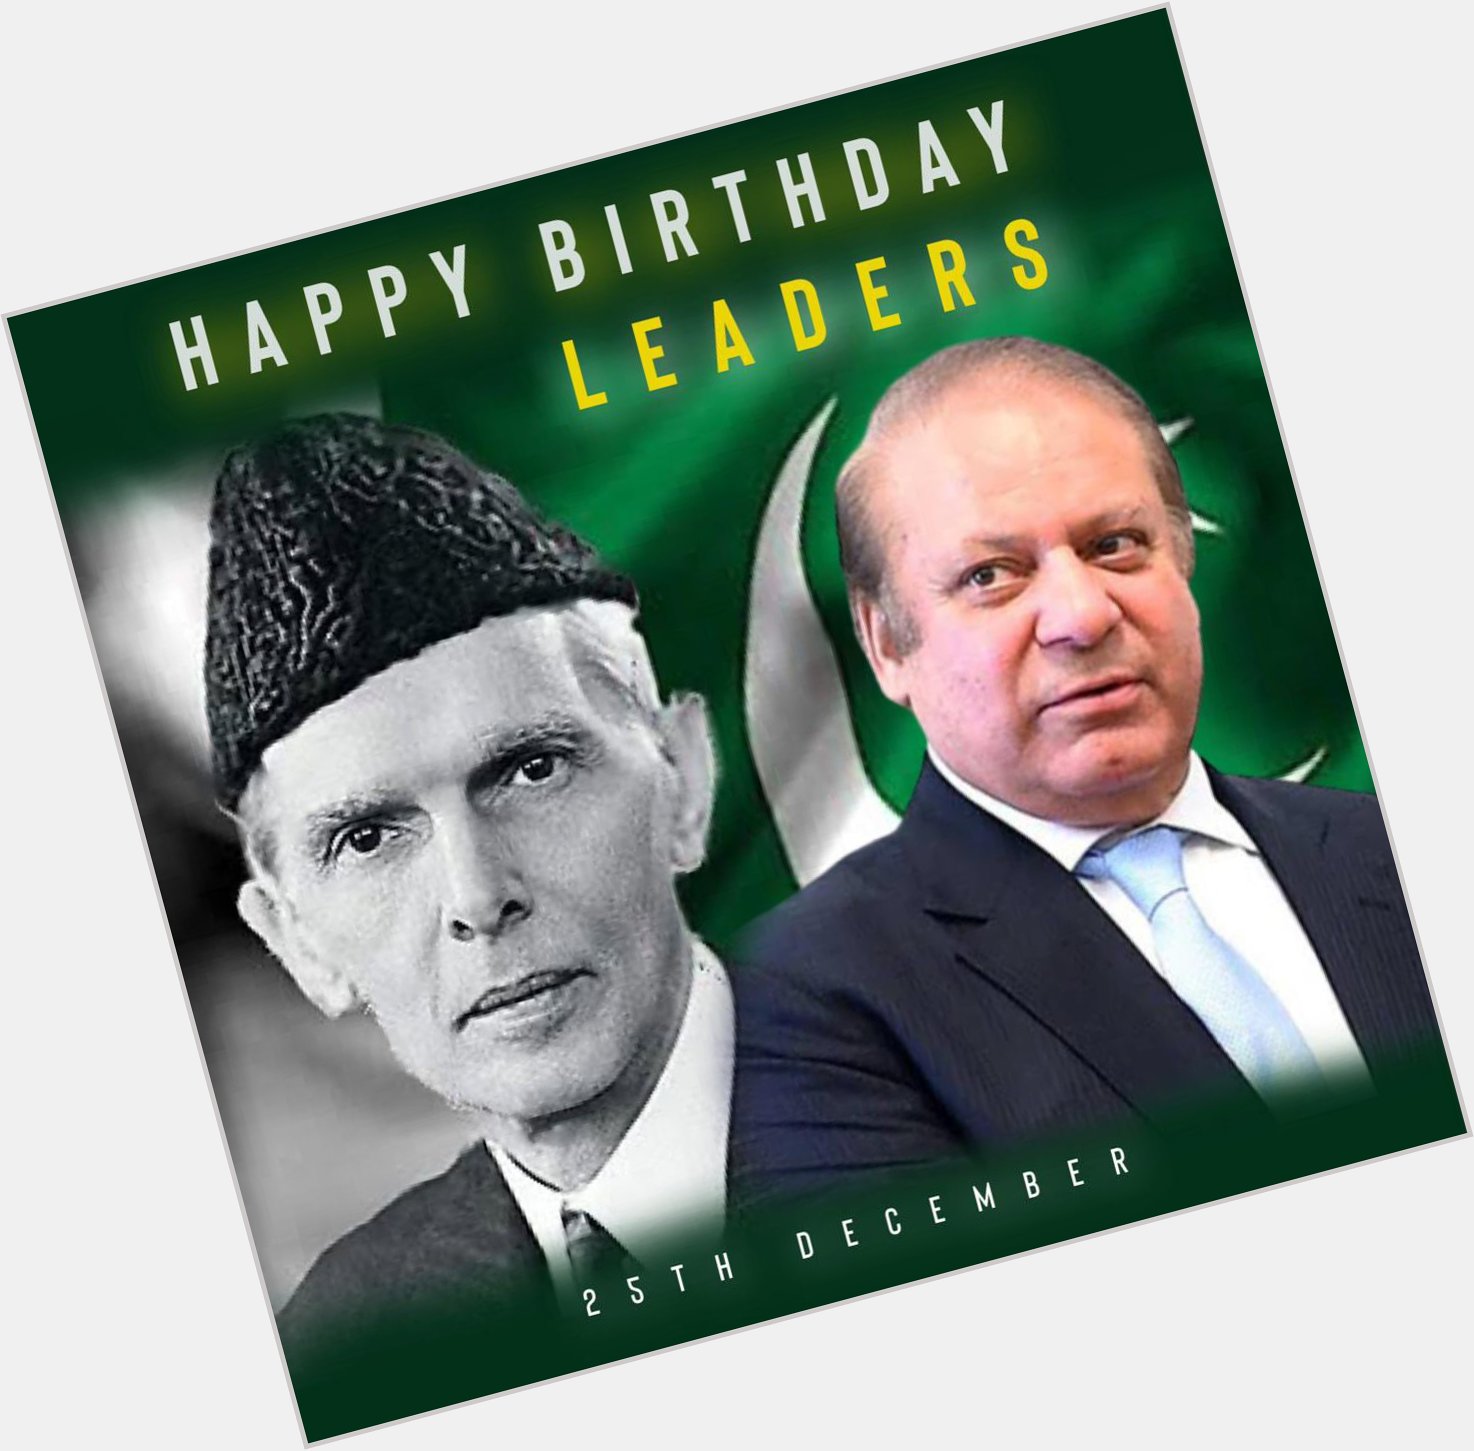 Happy Birthday Quaid e Azam
Happy Birthday  my leader Muhammad Nawaz Sharif   